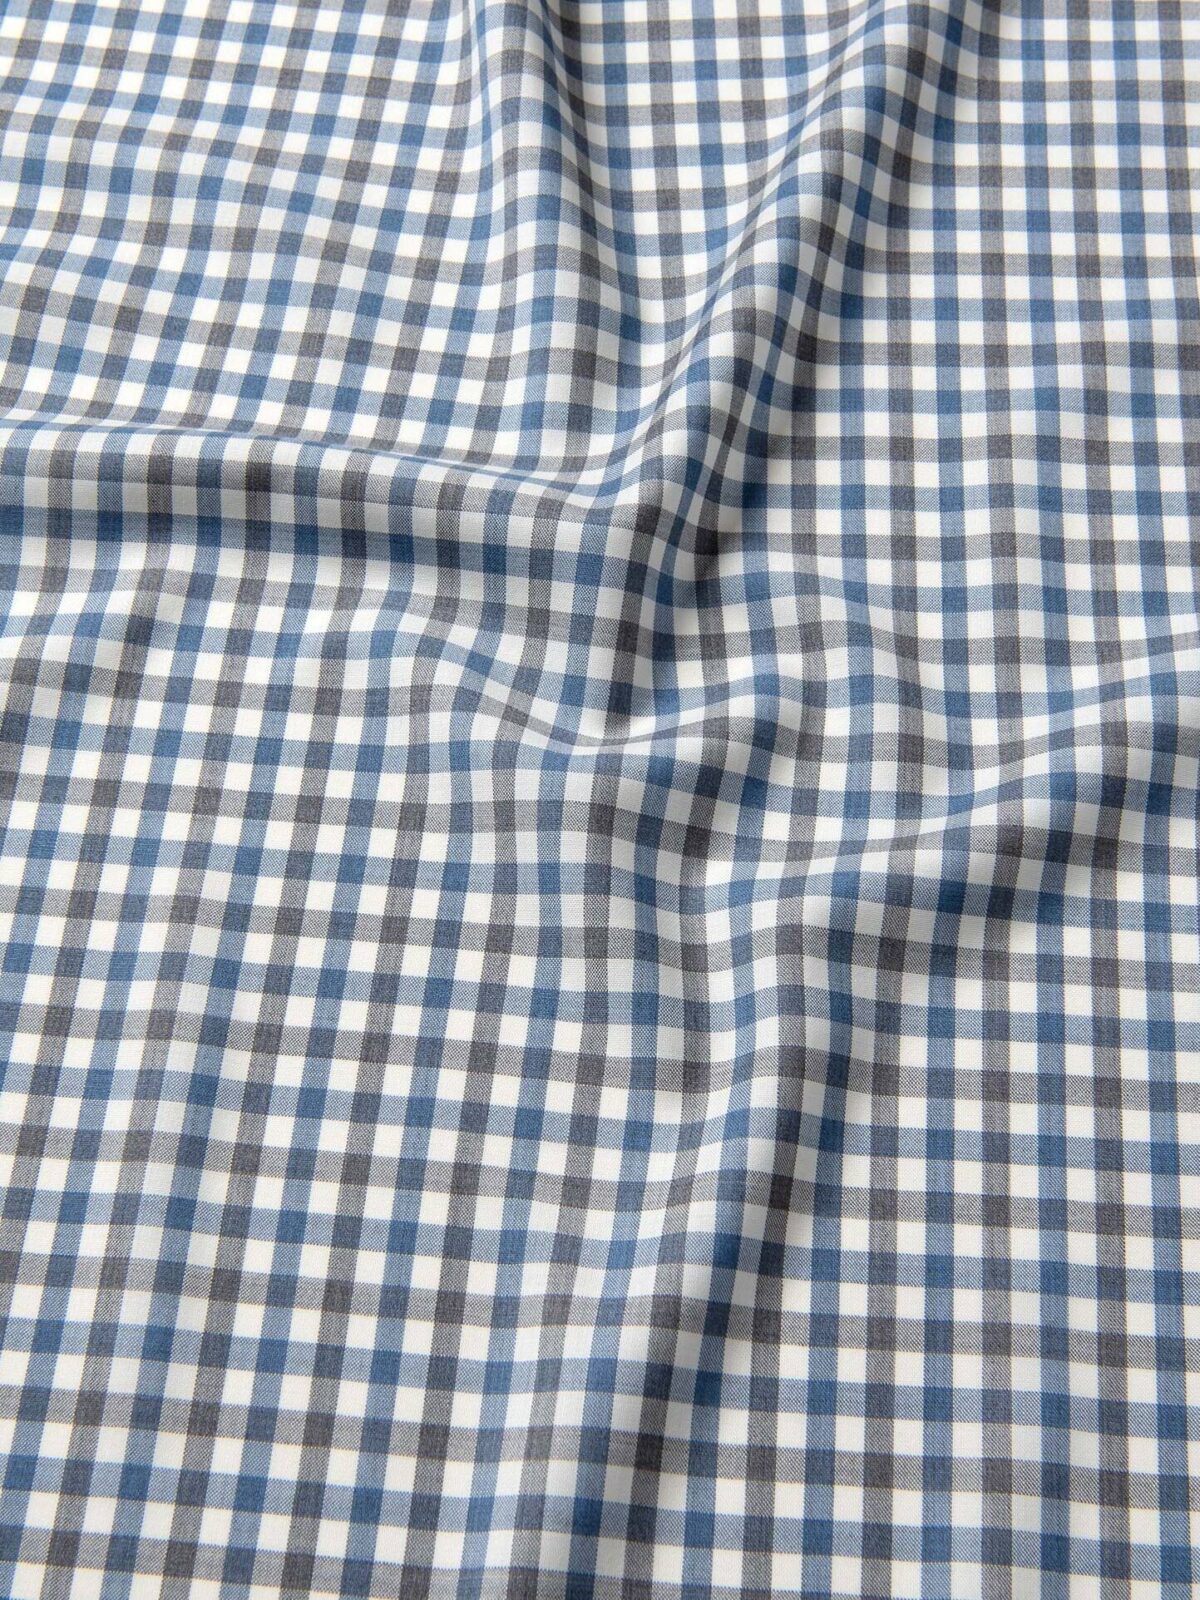 Reda Grey and Blue Melange Gingham Merino Wool Shirts by Proper Cloth